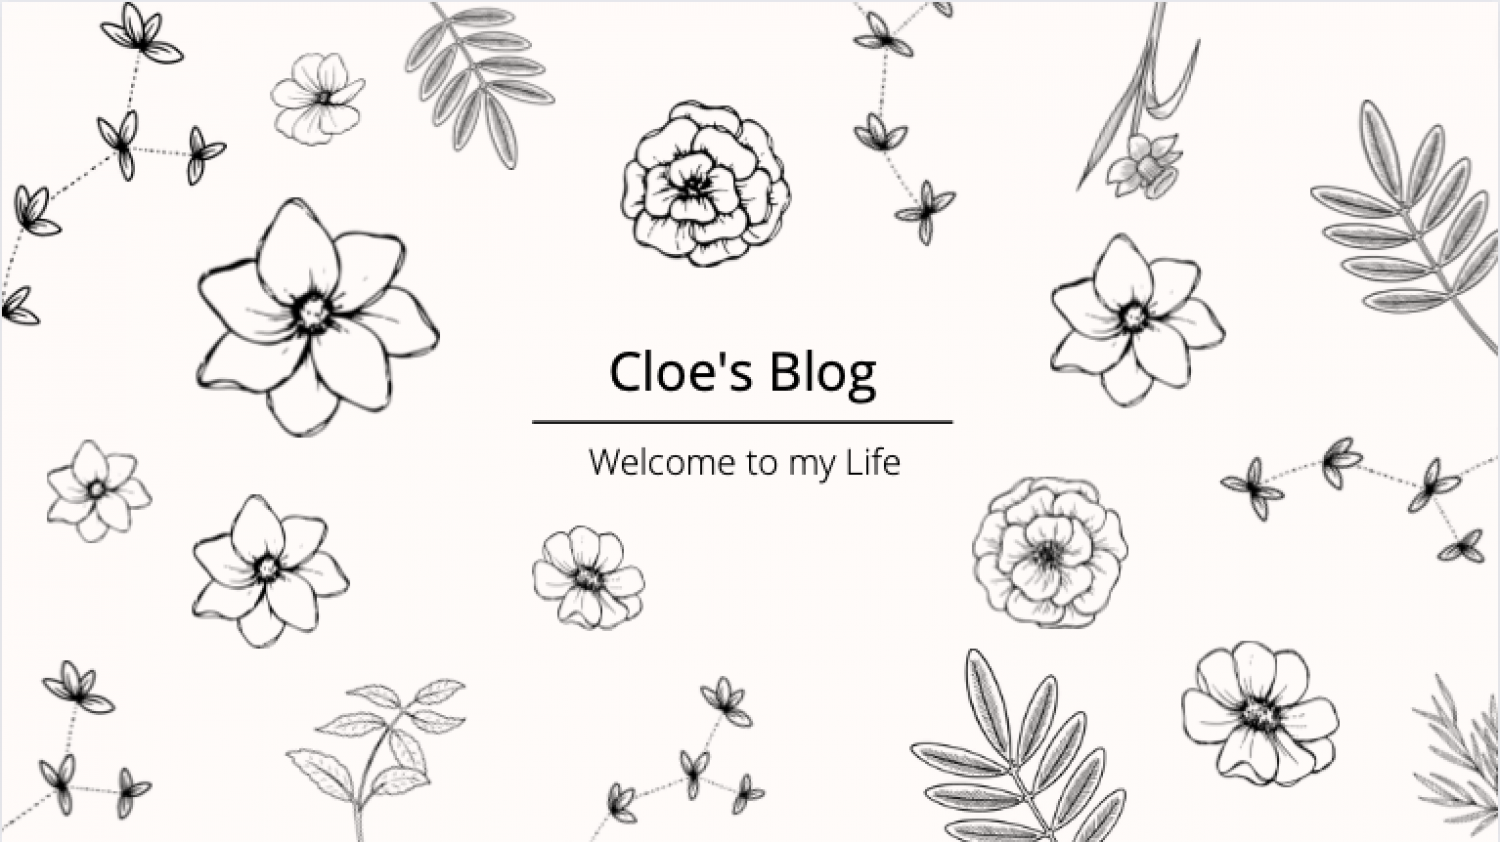 Cloe's Blog